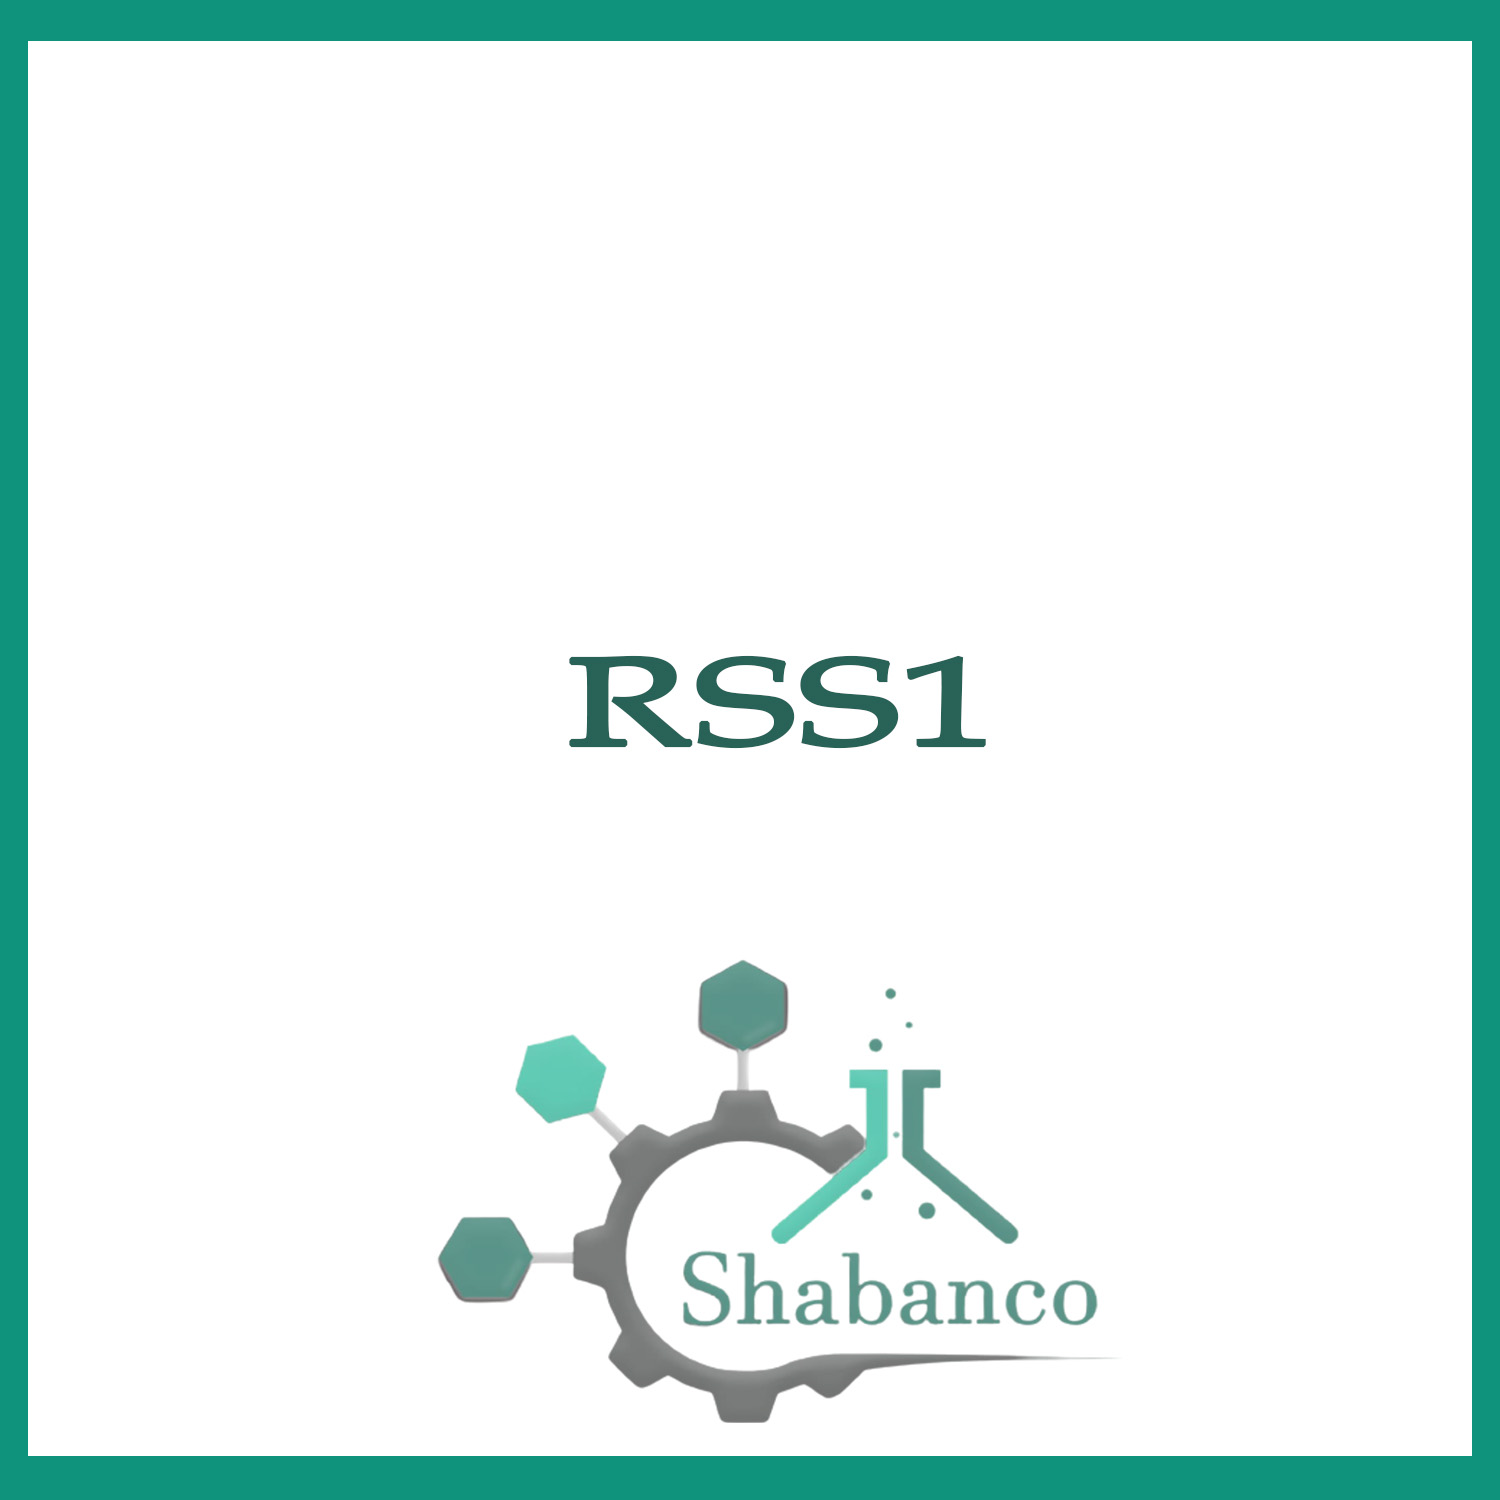 RSS1